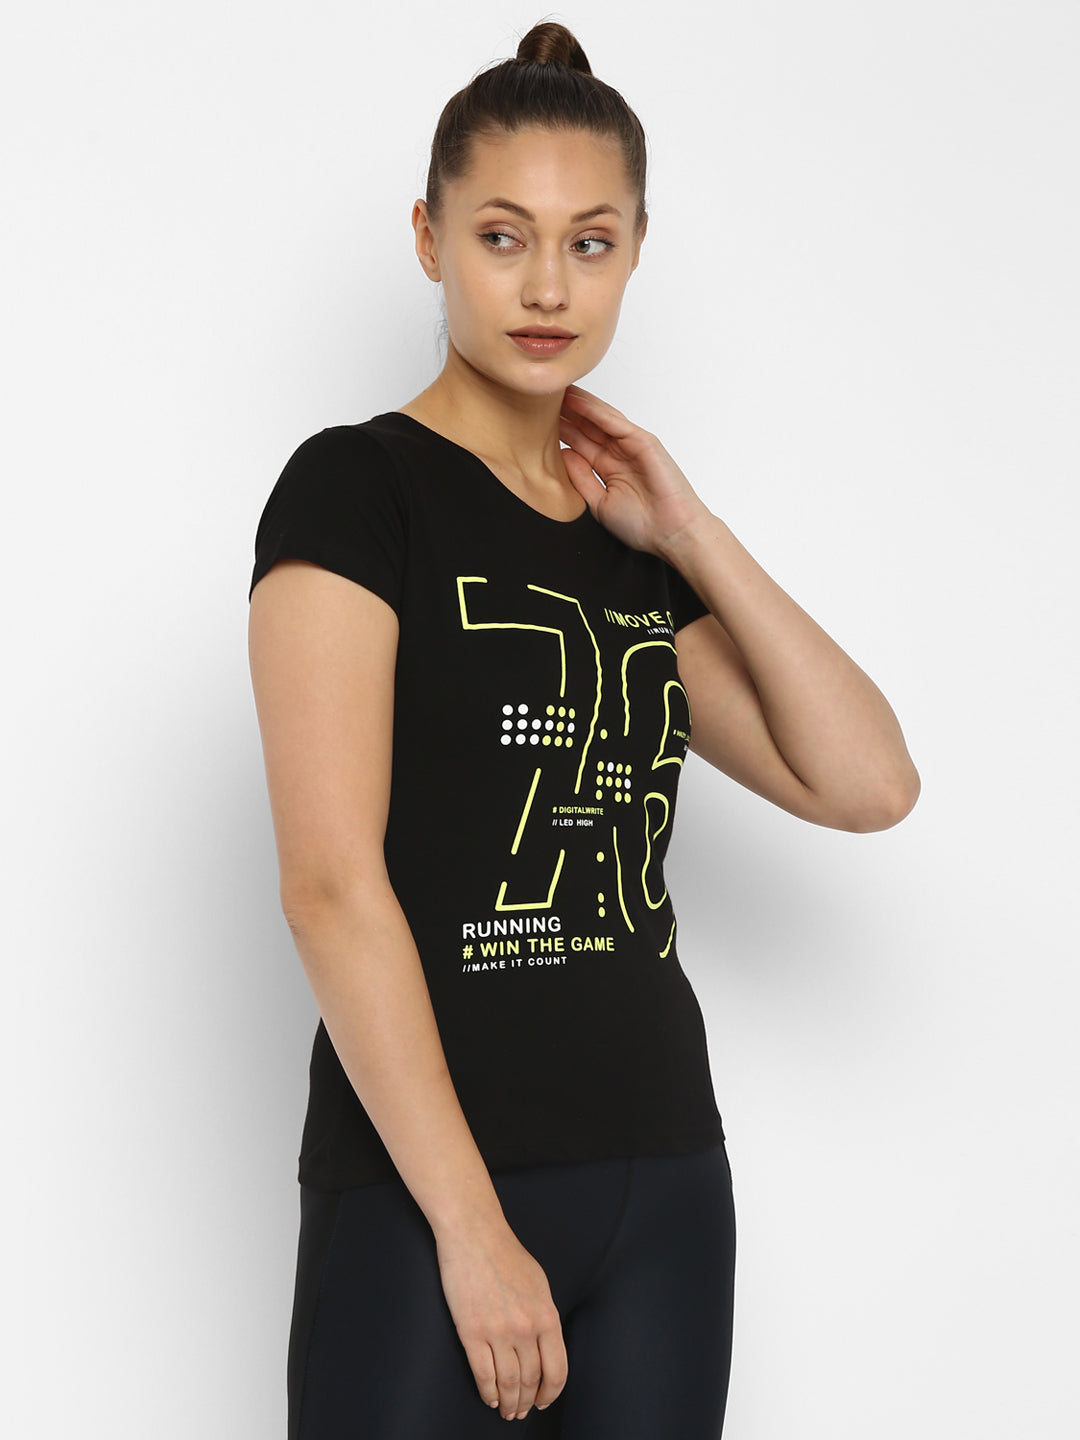 Ap'pulse Women's Printed Sport T-Shirt